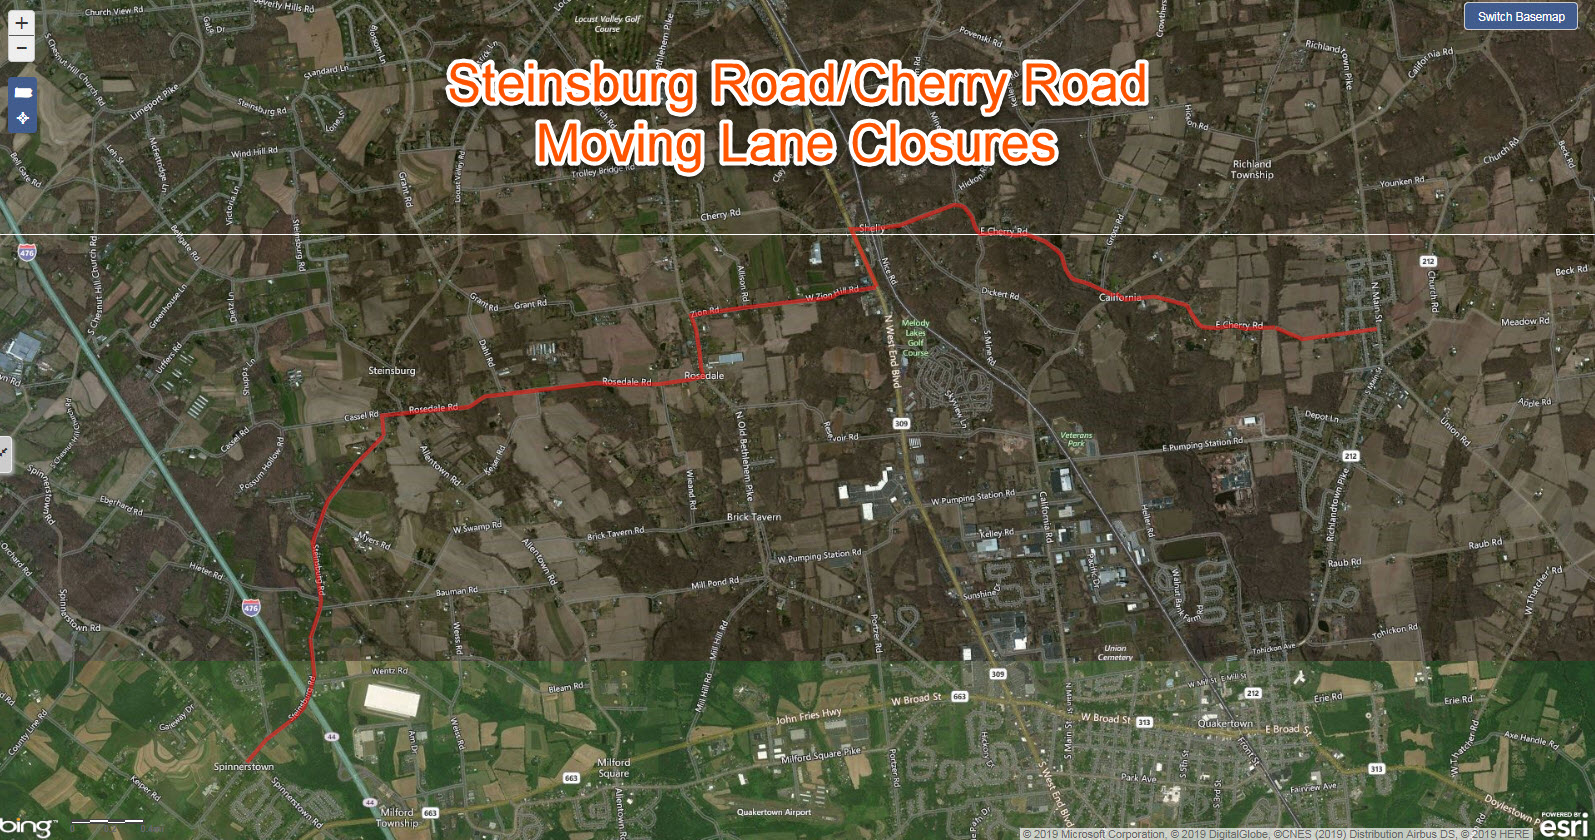 Steinsburg Rd Cherry Rd Moving Lane Closures Bucks County.jpg